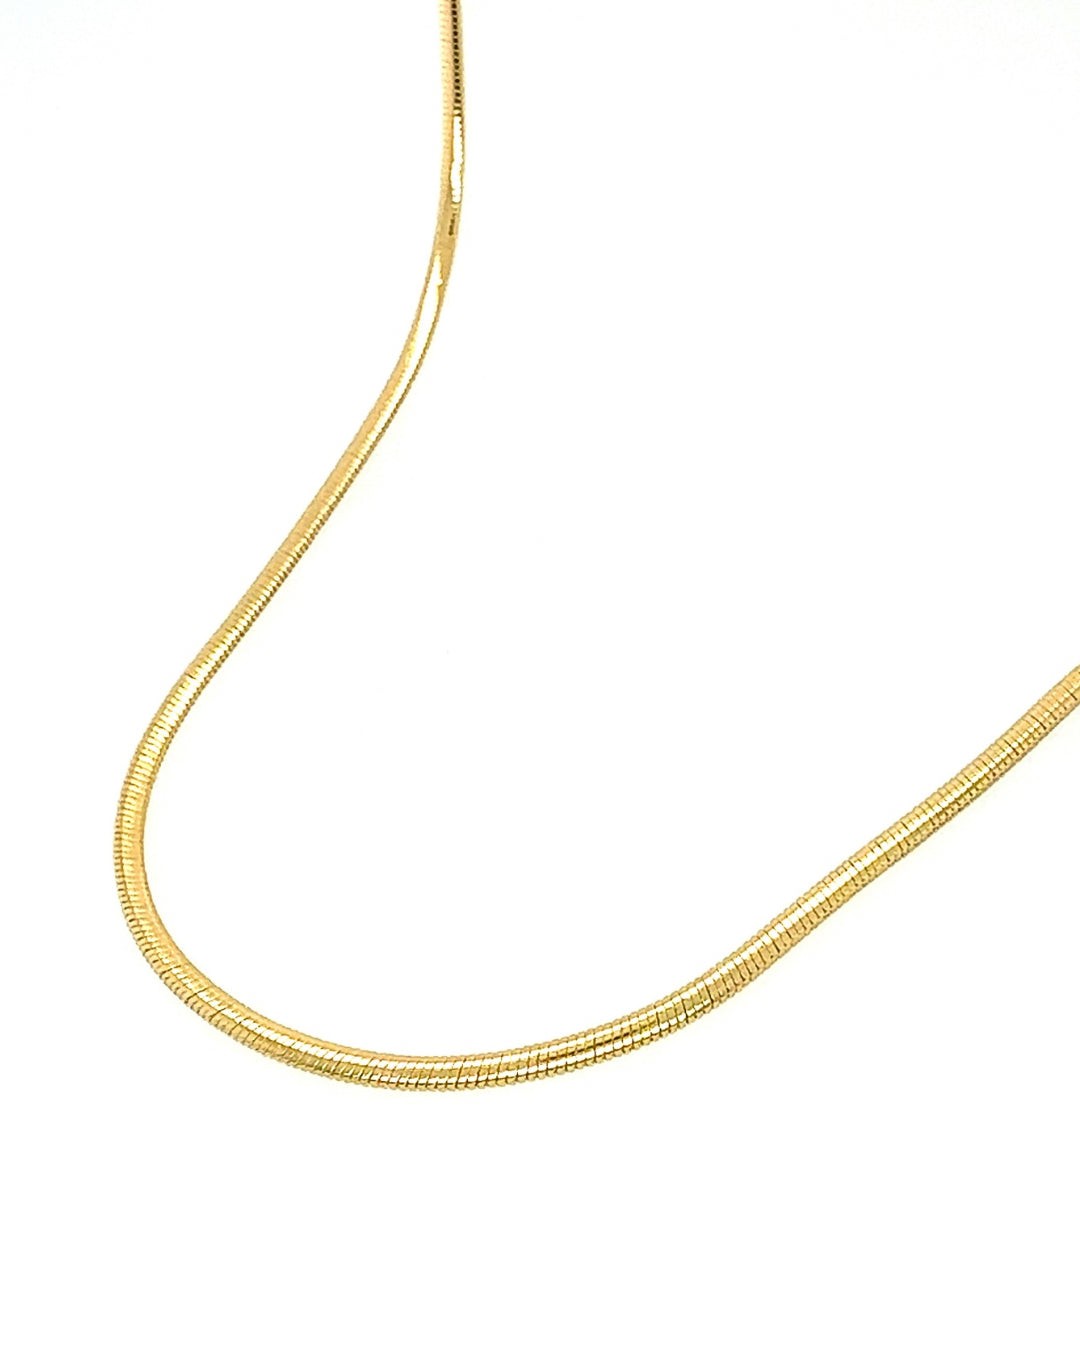 Gold fill herringbone snake chain necklace choker 